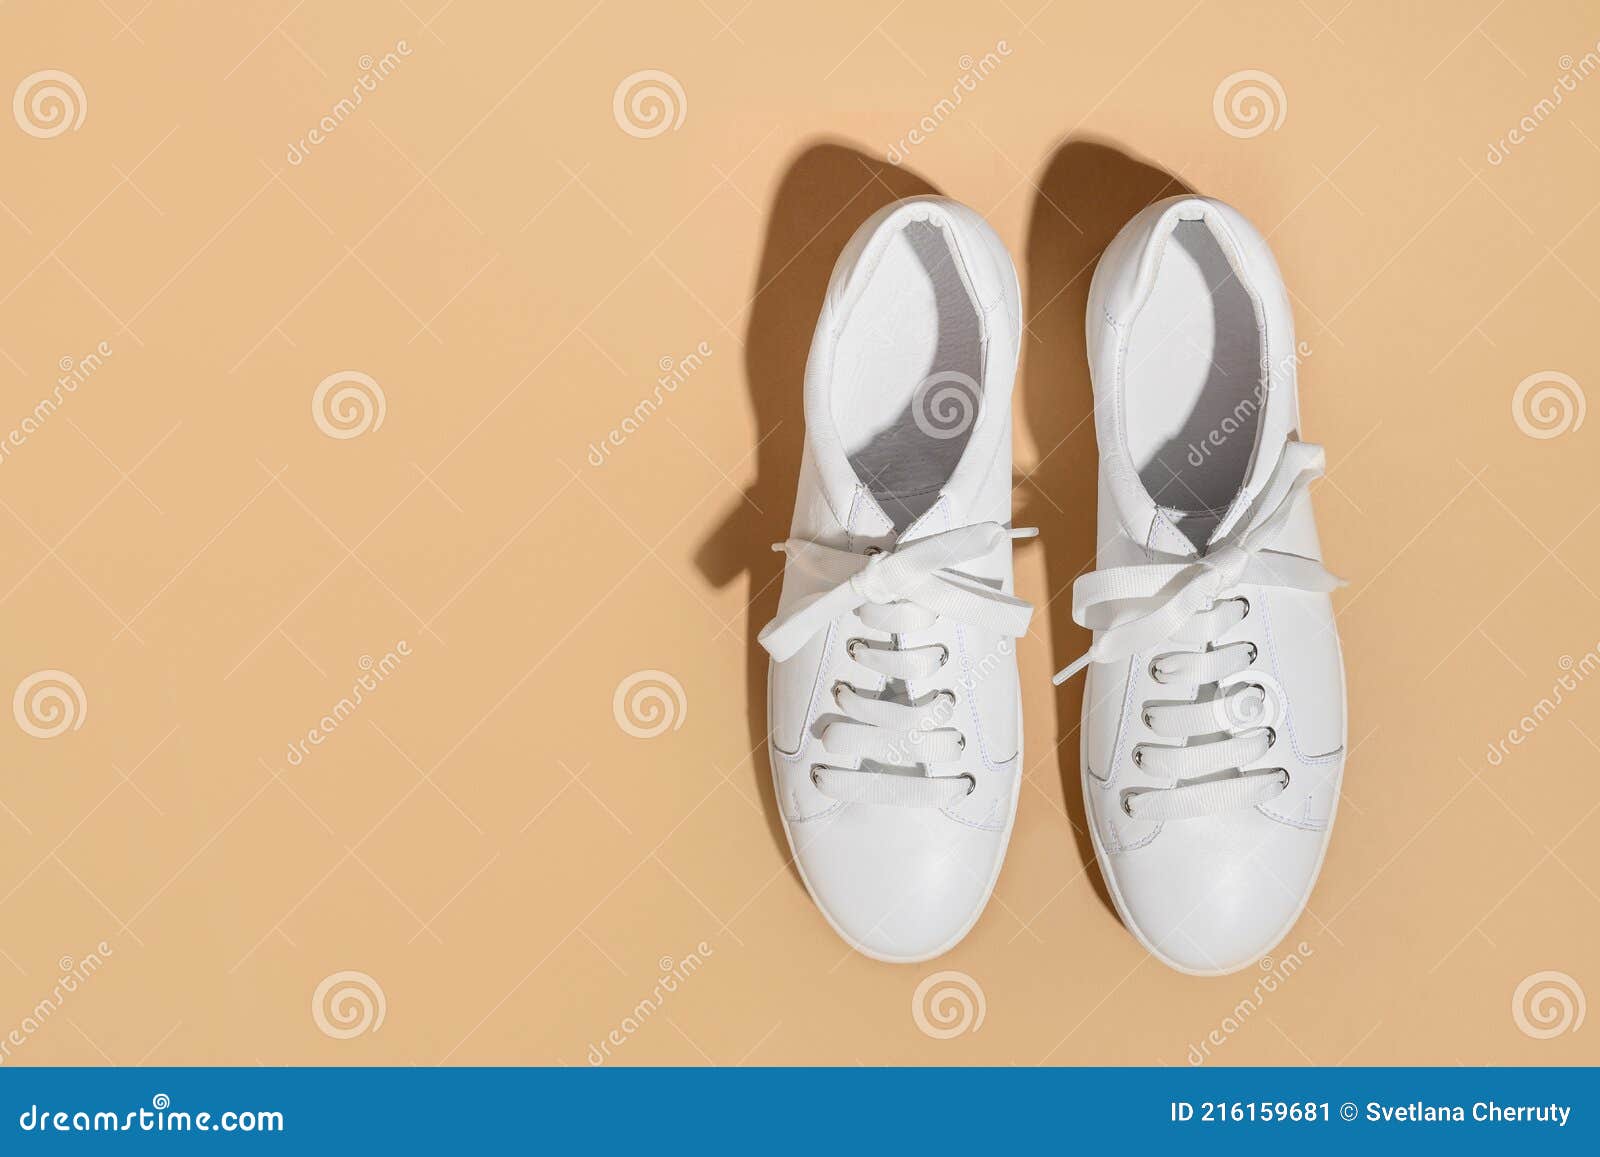 White New Female Gumshoes on Beige Background. Stock Image - Image of ...